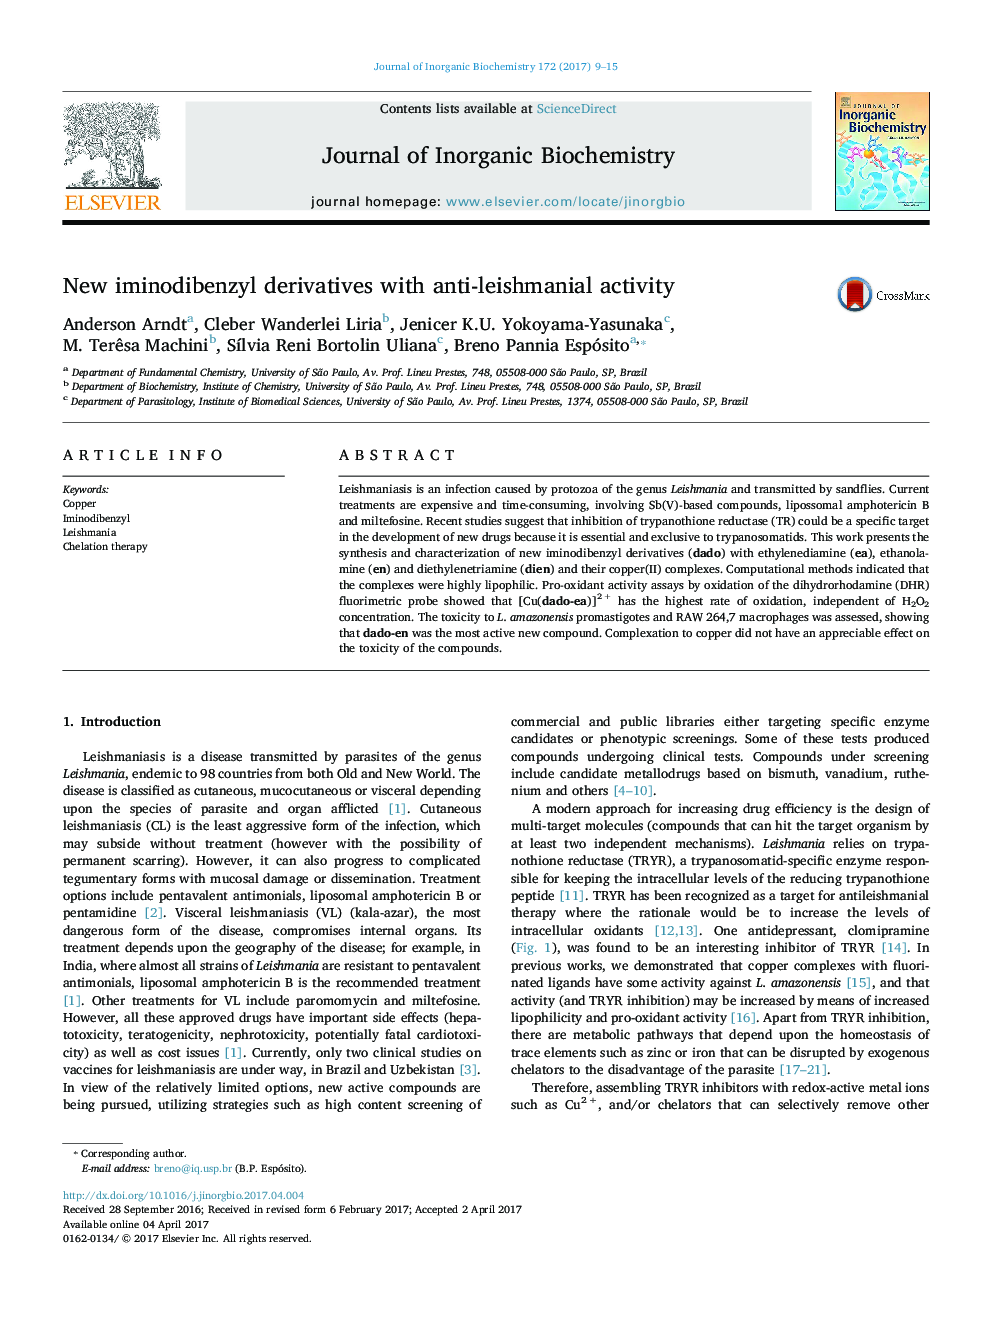 New iminodibenzyl derivatives with anti-leishmanial activity